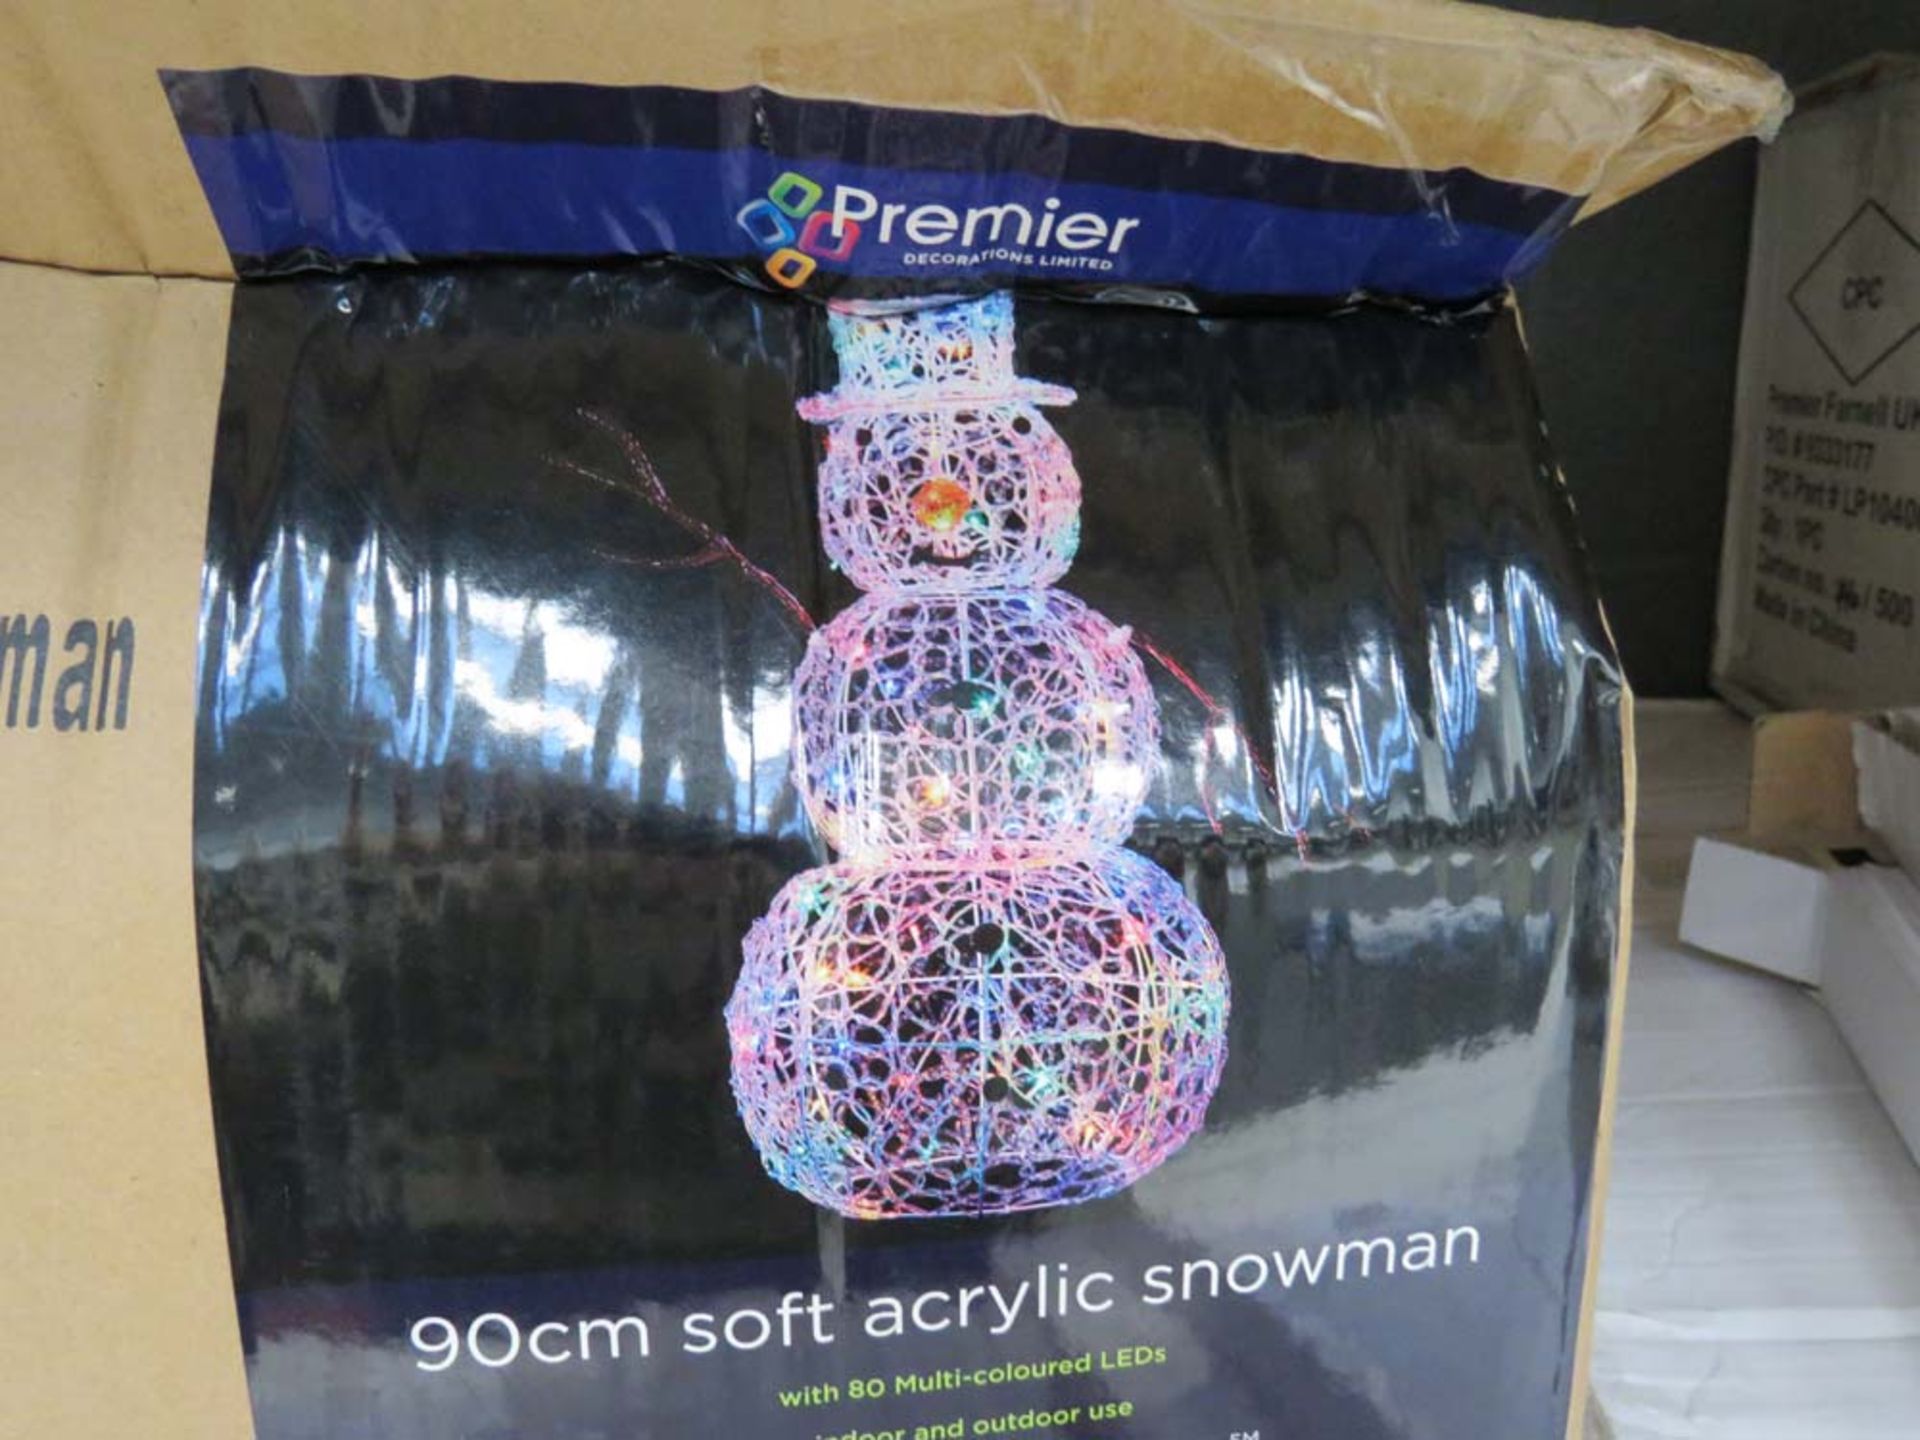 90 cm lit soft acrylic snowman plus a large outdoor Christmas light - Image 2 of 2